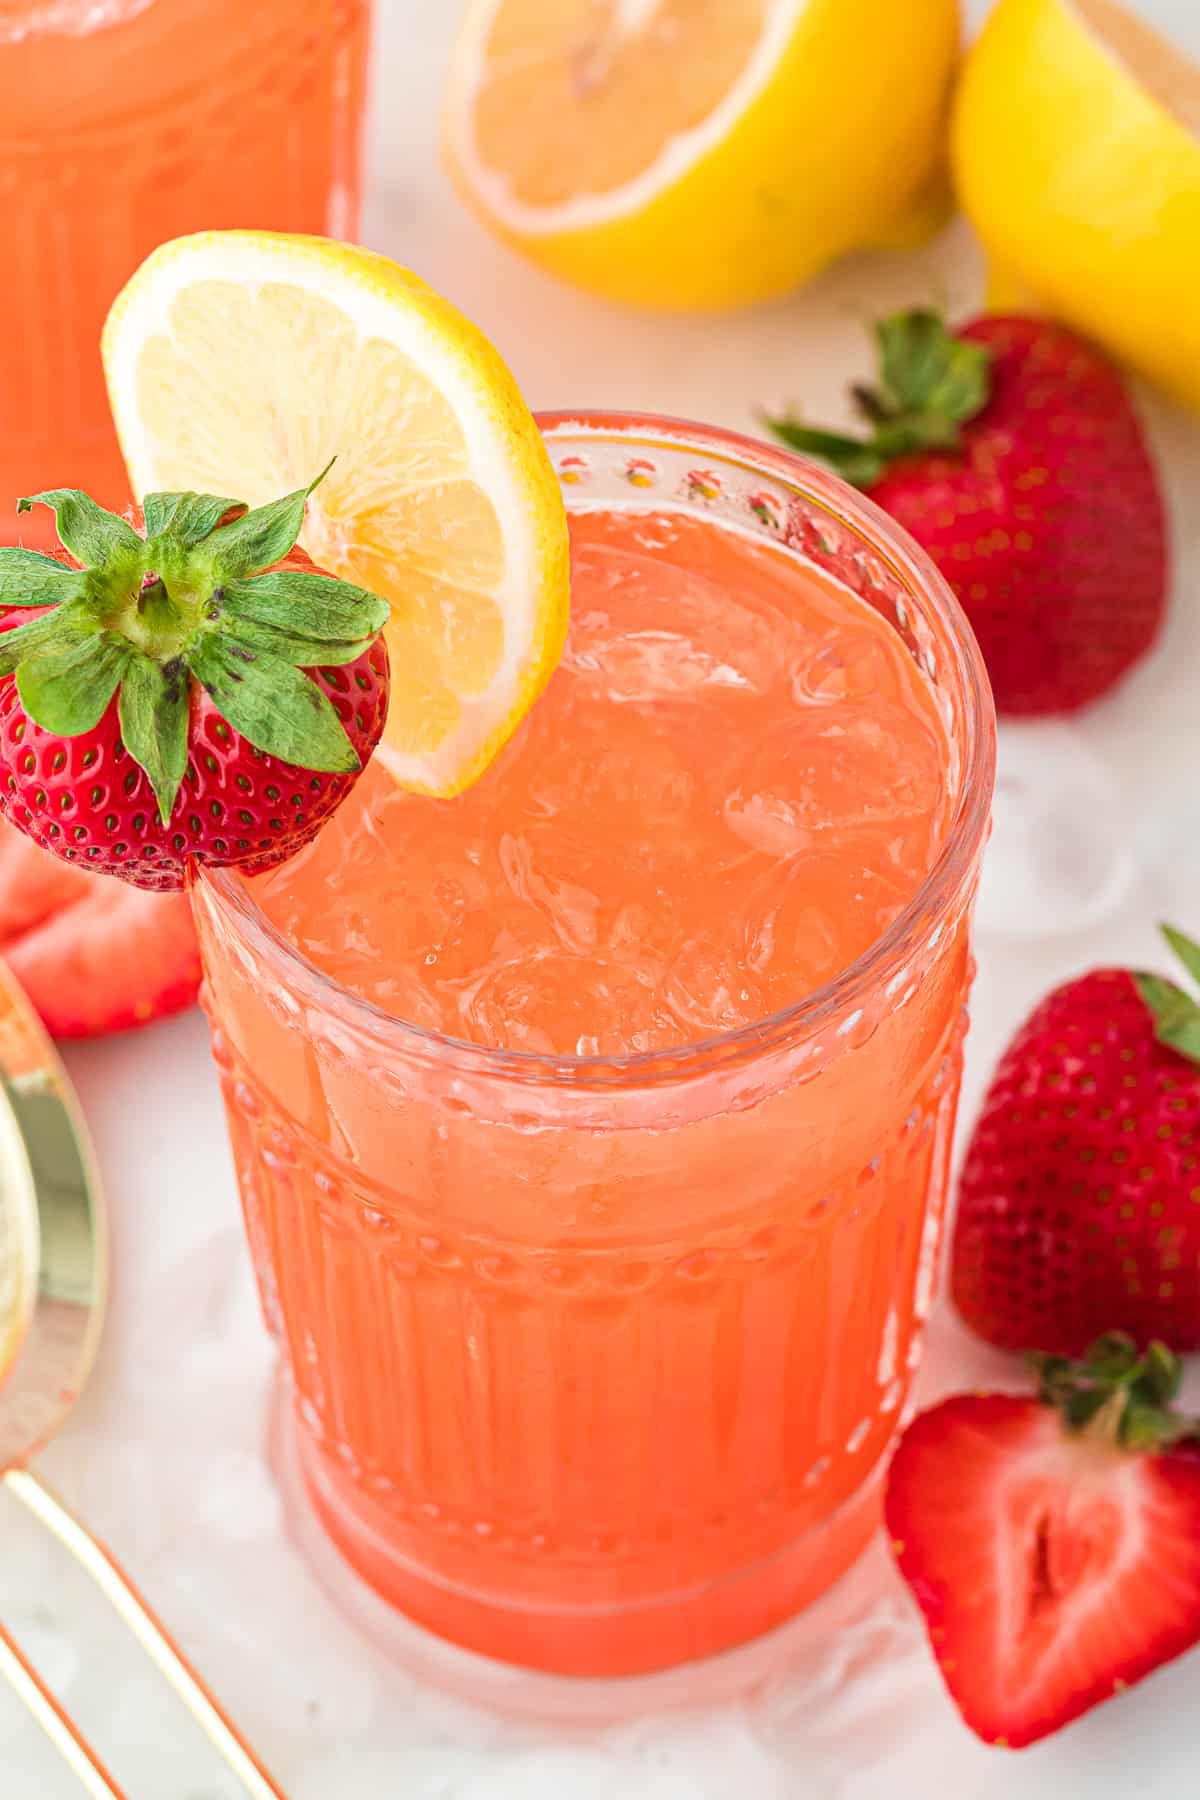 Glass of strawberry lemonade vodka with strawberry and lemon on the rim.